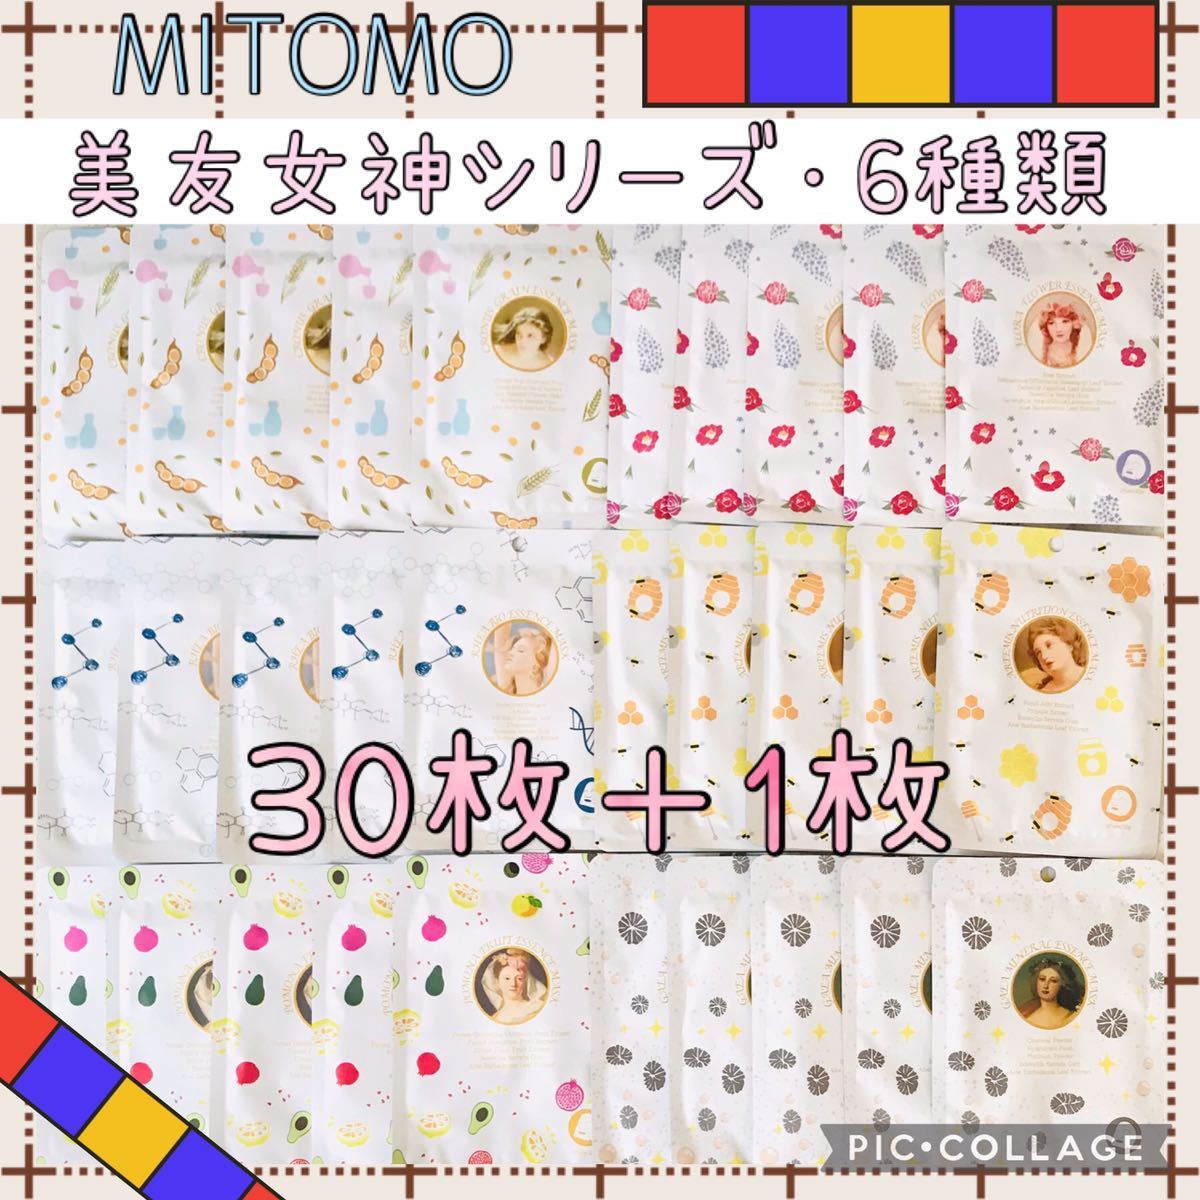 MITOMO 美友女神シリーズ④ フェイスパック 5種類・30枚セット☆彡-